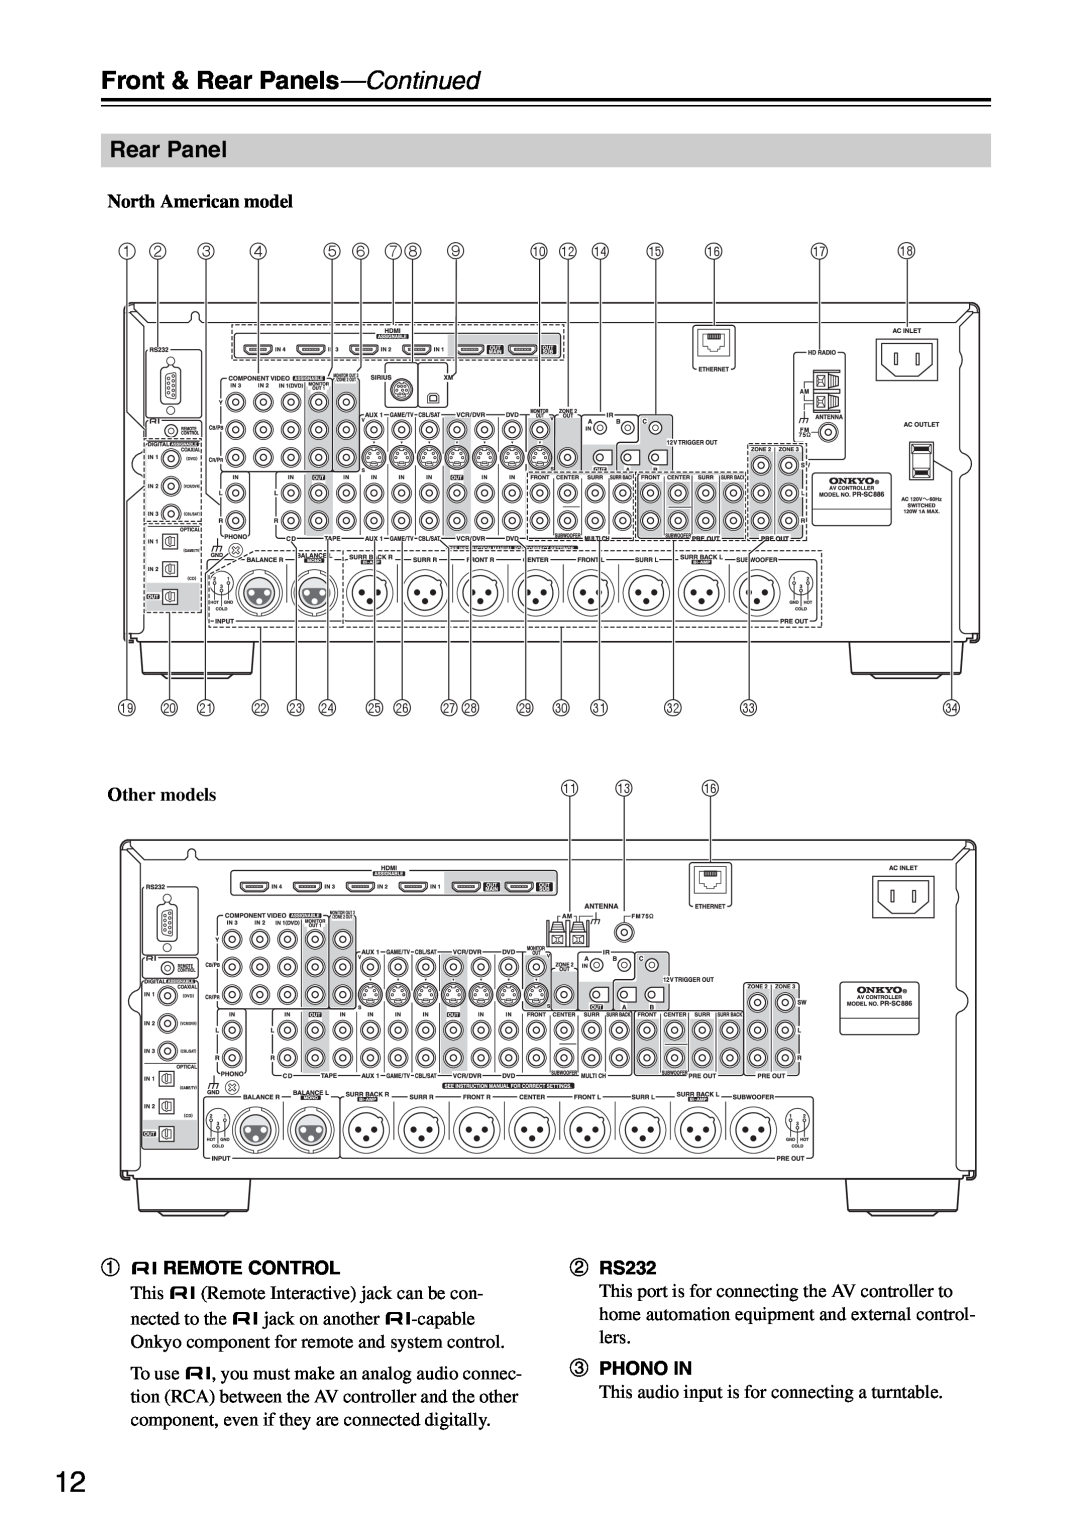 Onkyo PR-SC886 instruction manual Front & Rear Panels—Continued, bk bm bo, cn co, cp cq, crcs 